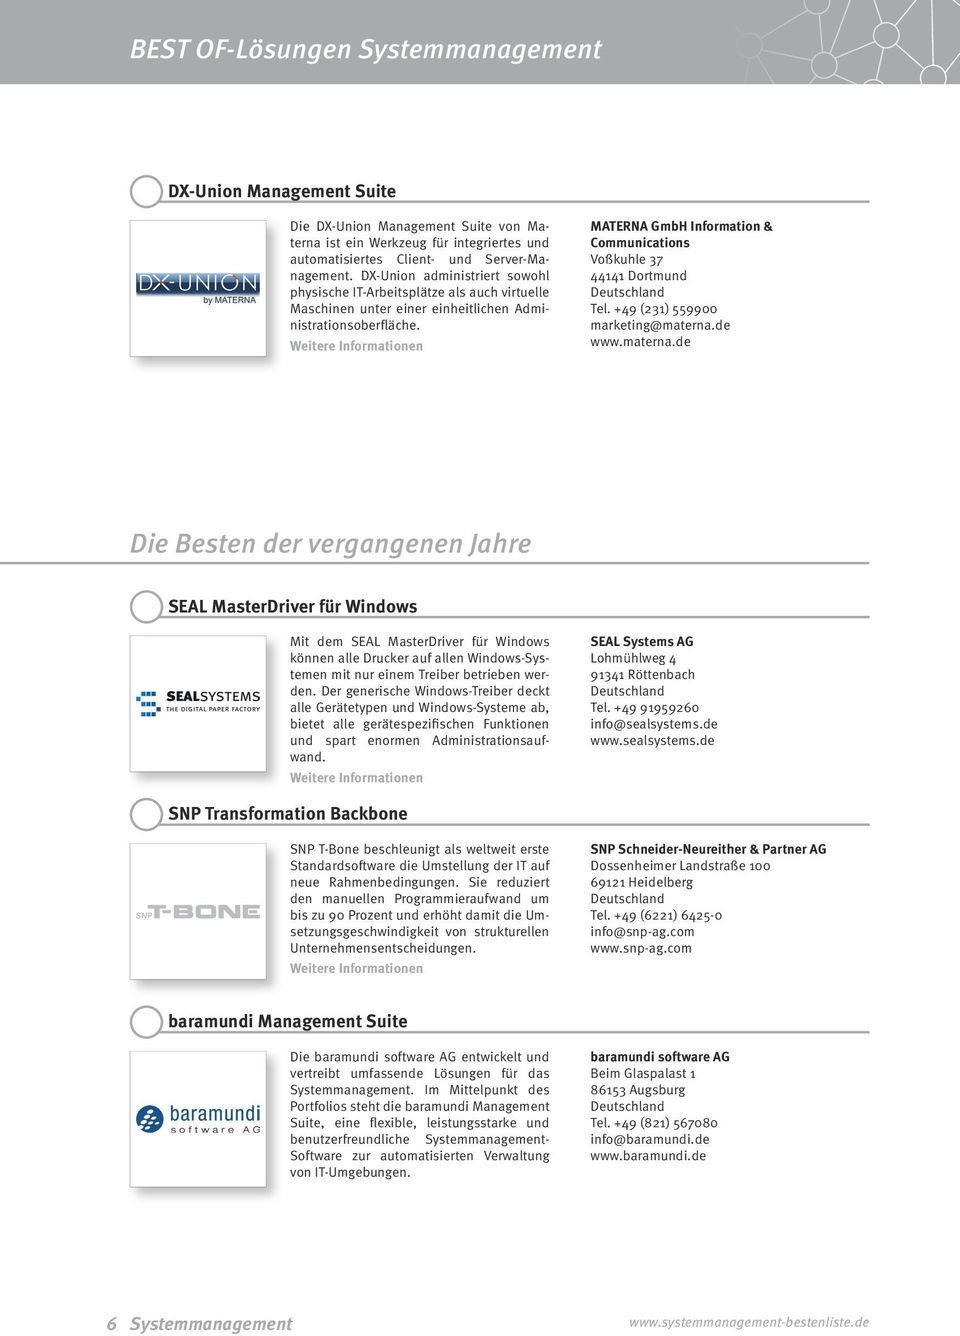 MATERNA GmbH Information & Communications Voßkuhle 37 44141 Dortmund Tel. +49 (231) 559900 marketing@materna.